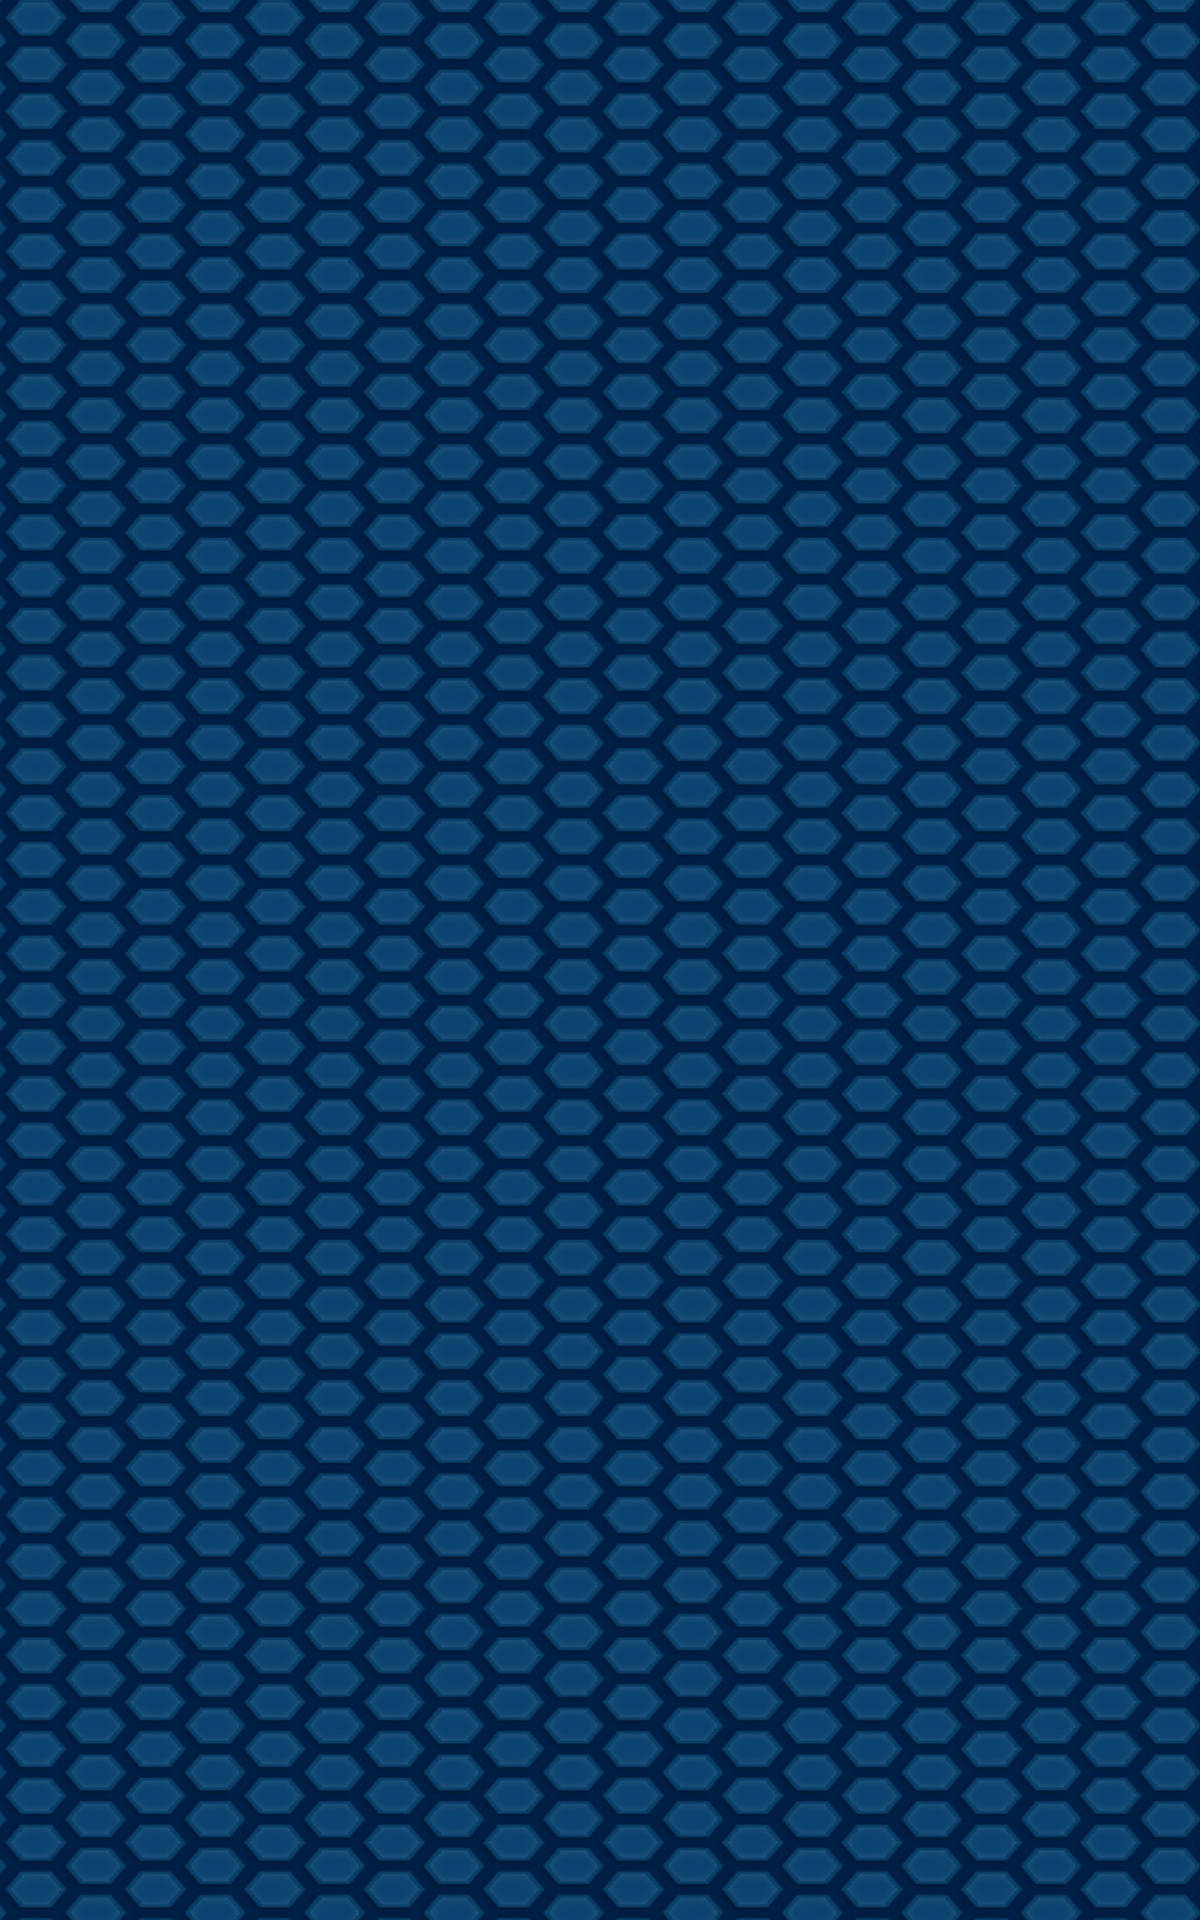 Plain Blue Honeycomb Design